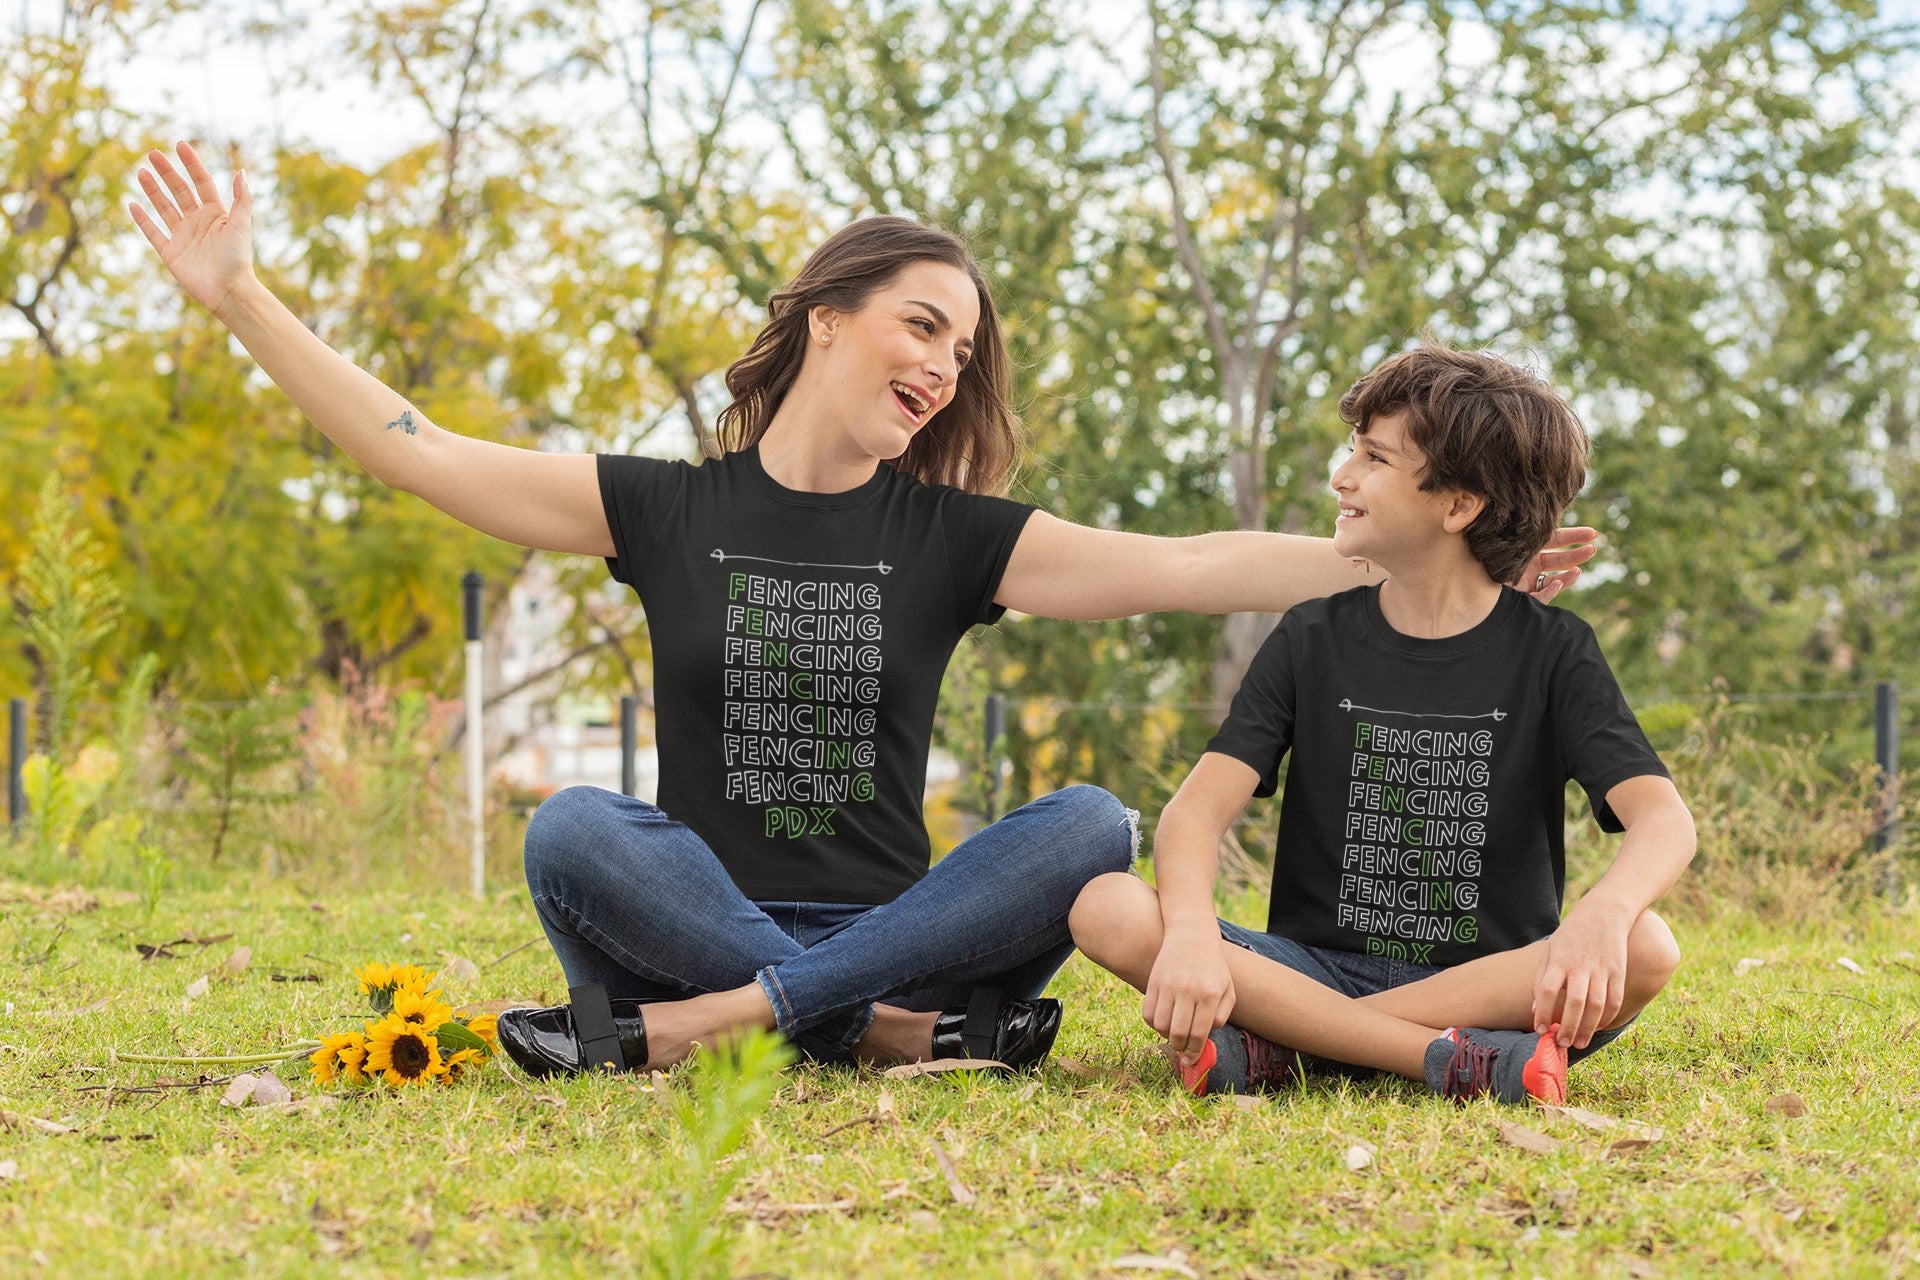 Kids Fencing Diagonal Typography - PDX T-Shirt